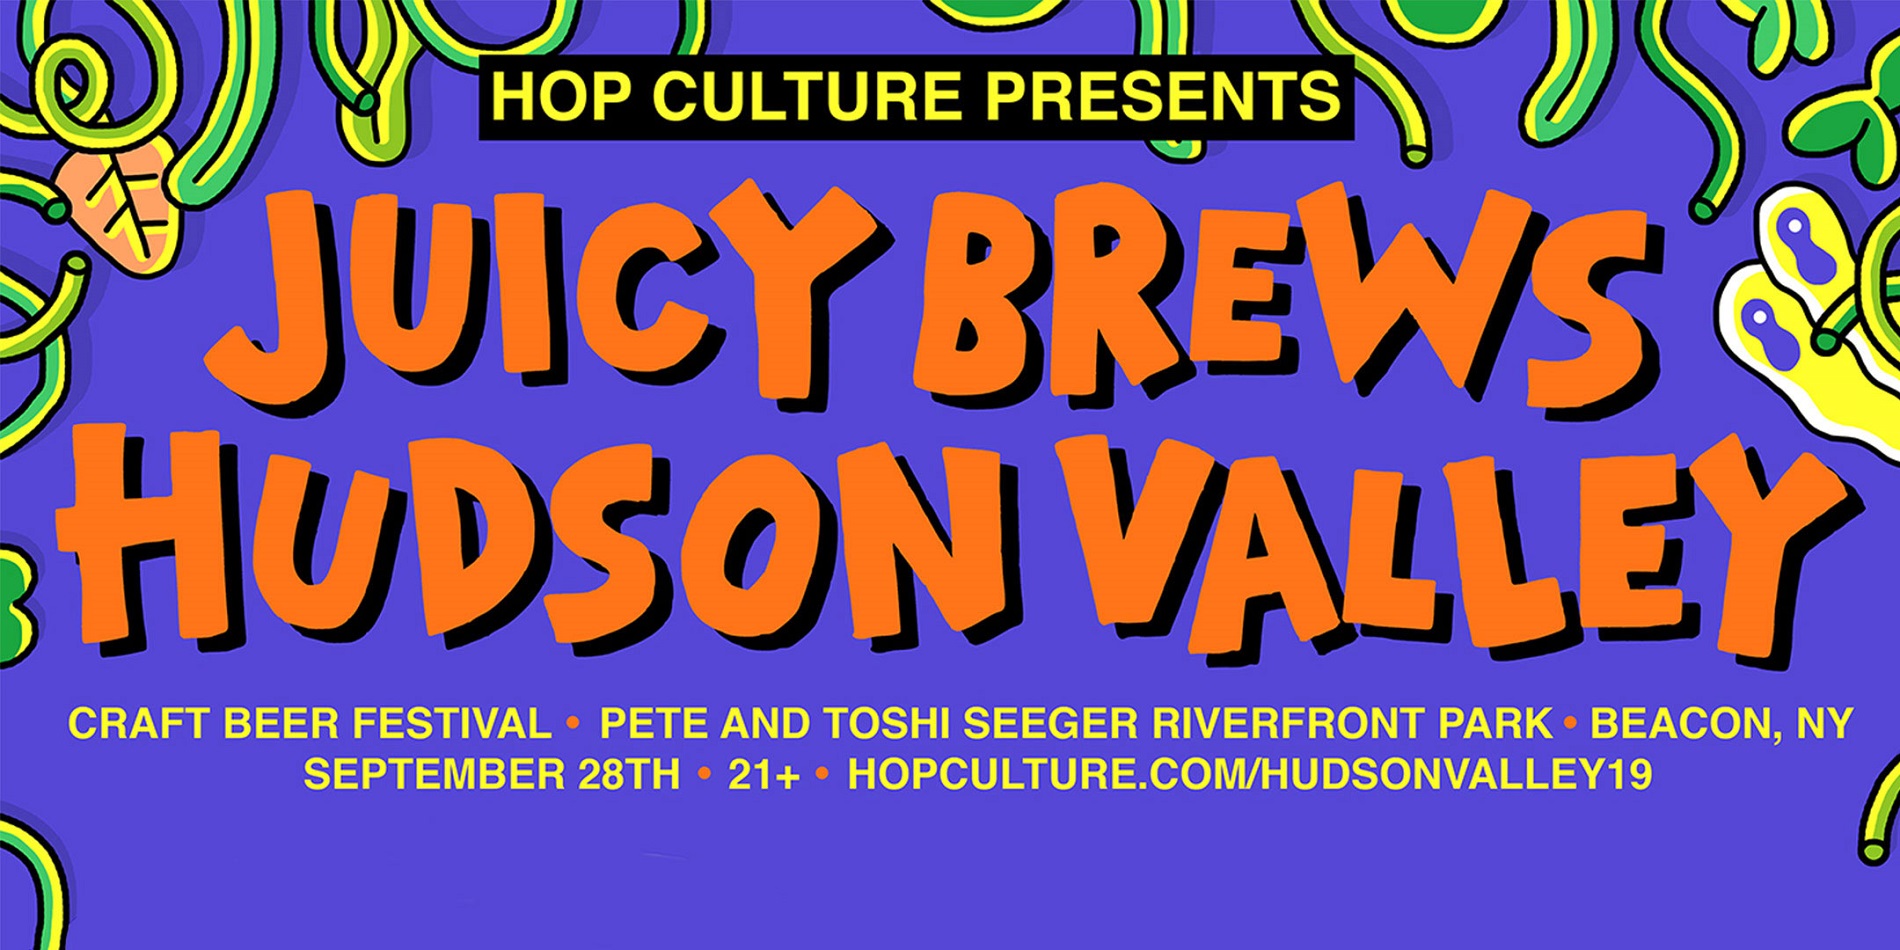 Juicy Brews Hudson Valley Craft Beer Festival banner image